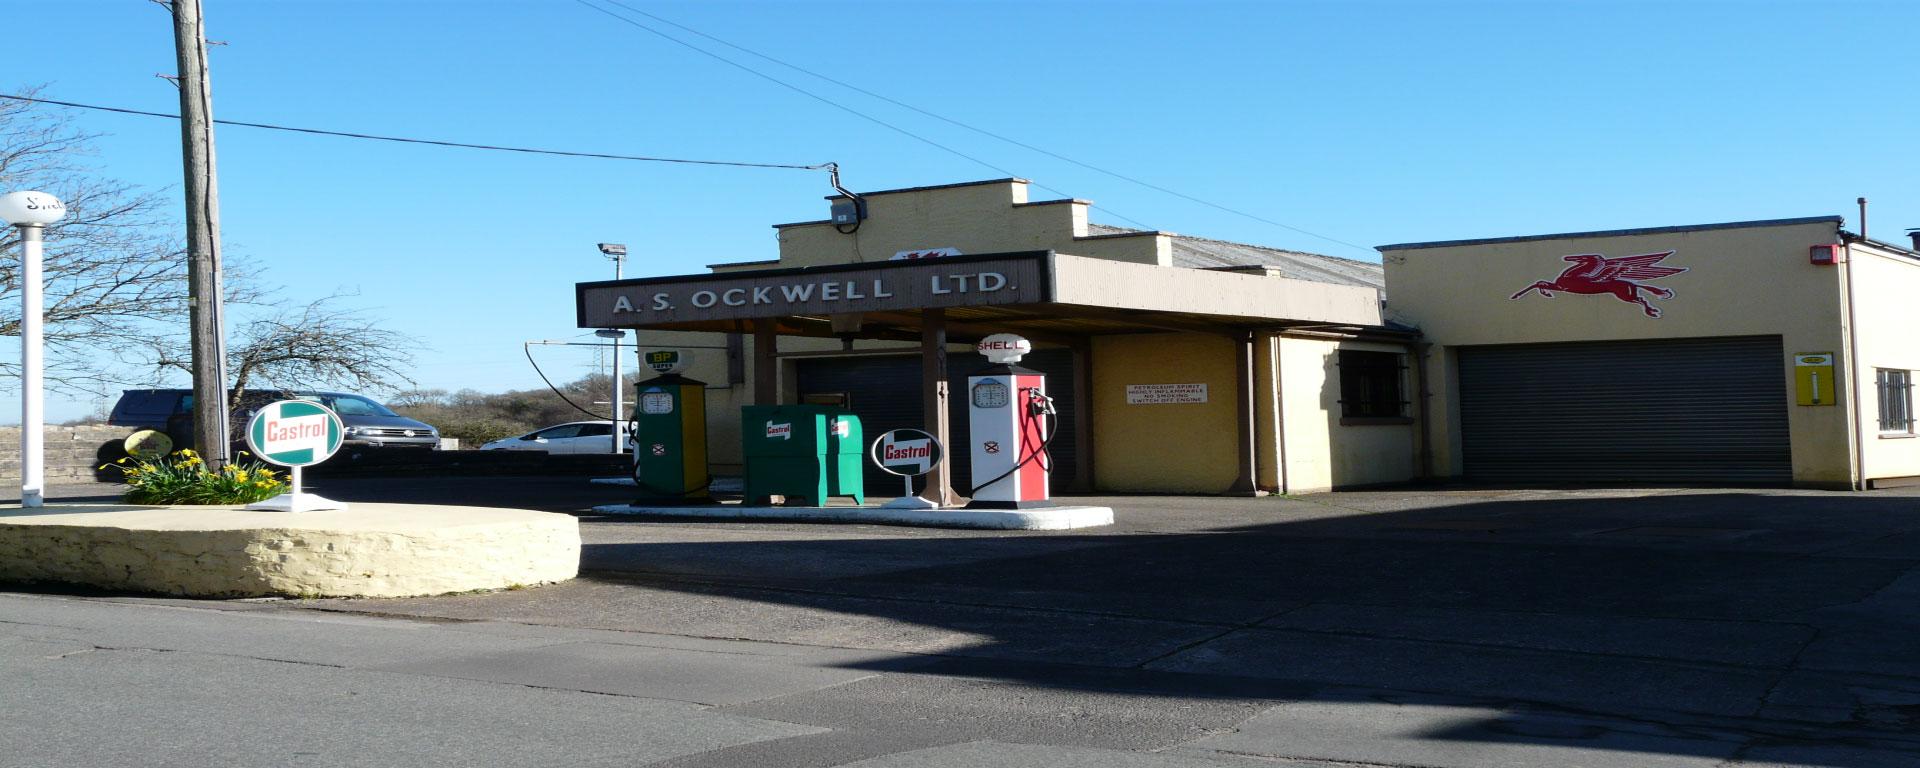 Ockwell garage